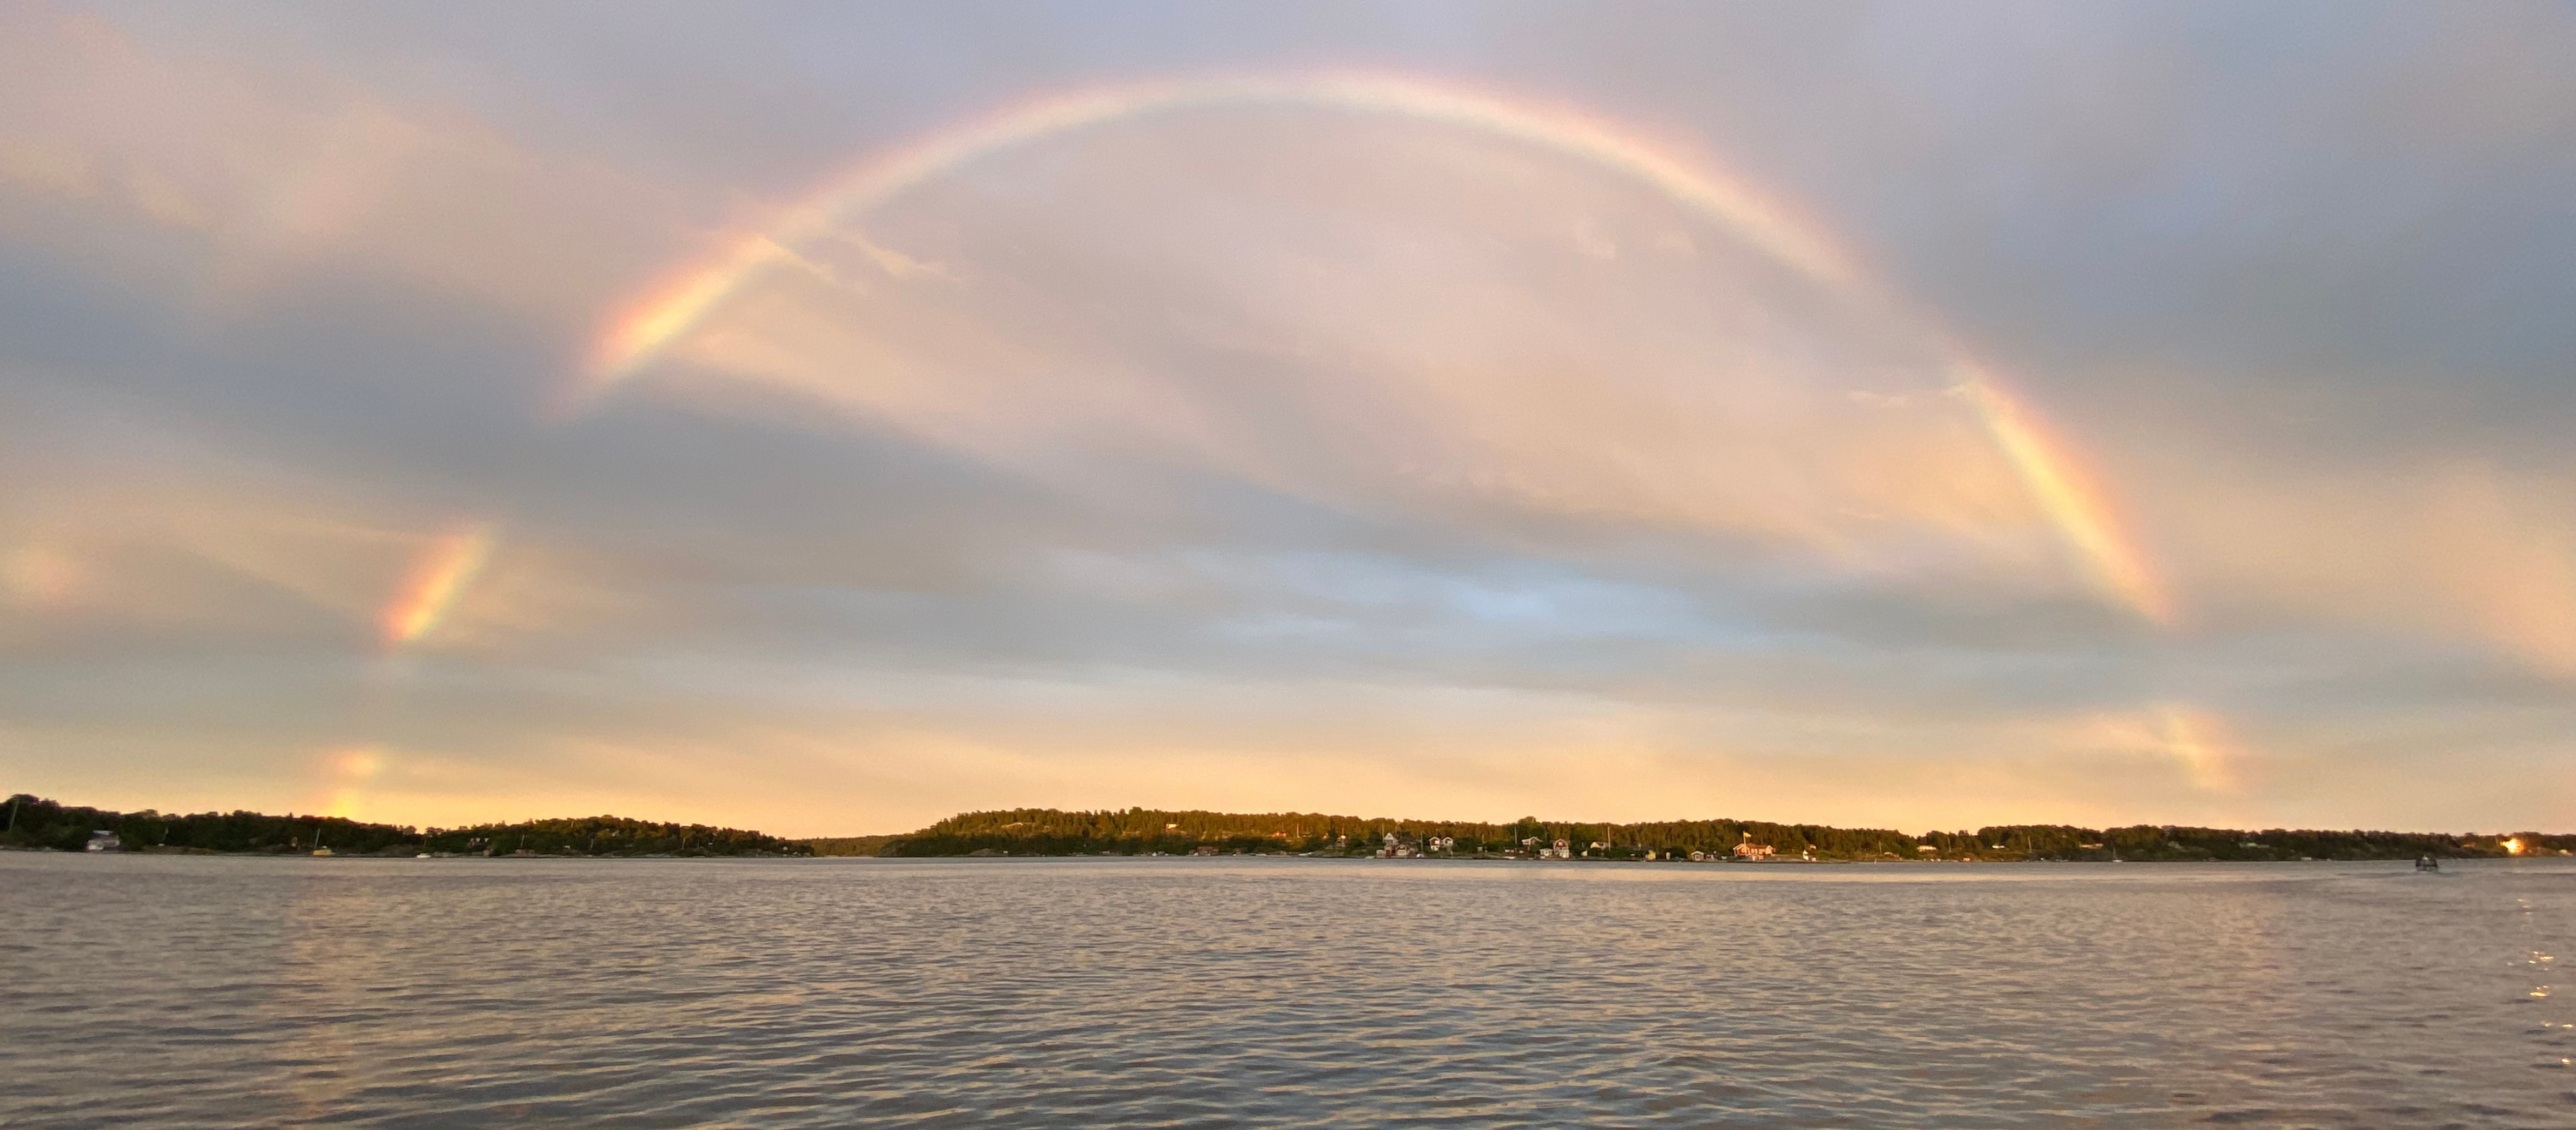 madhya-rainbow-in-dalarö-stockholm-archipelago